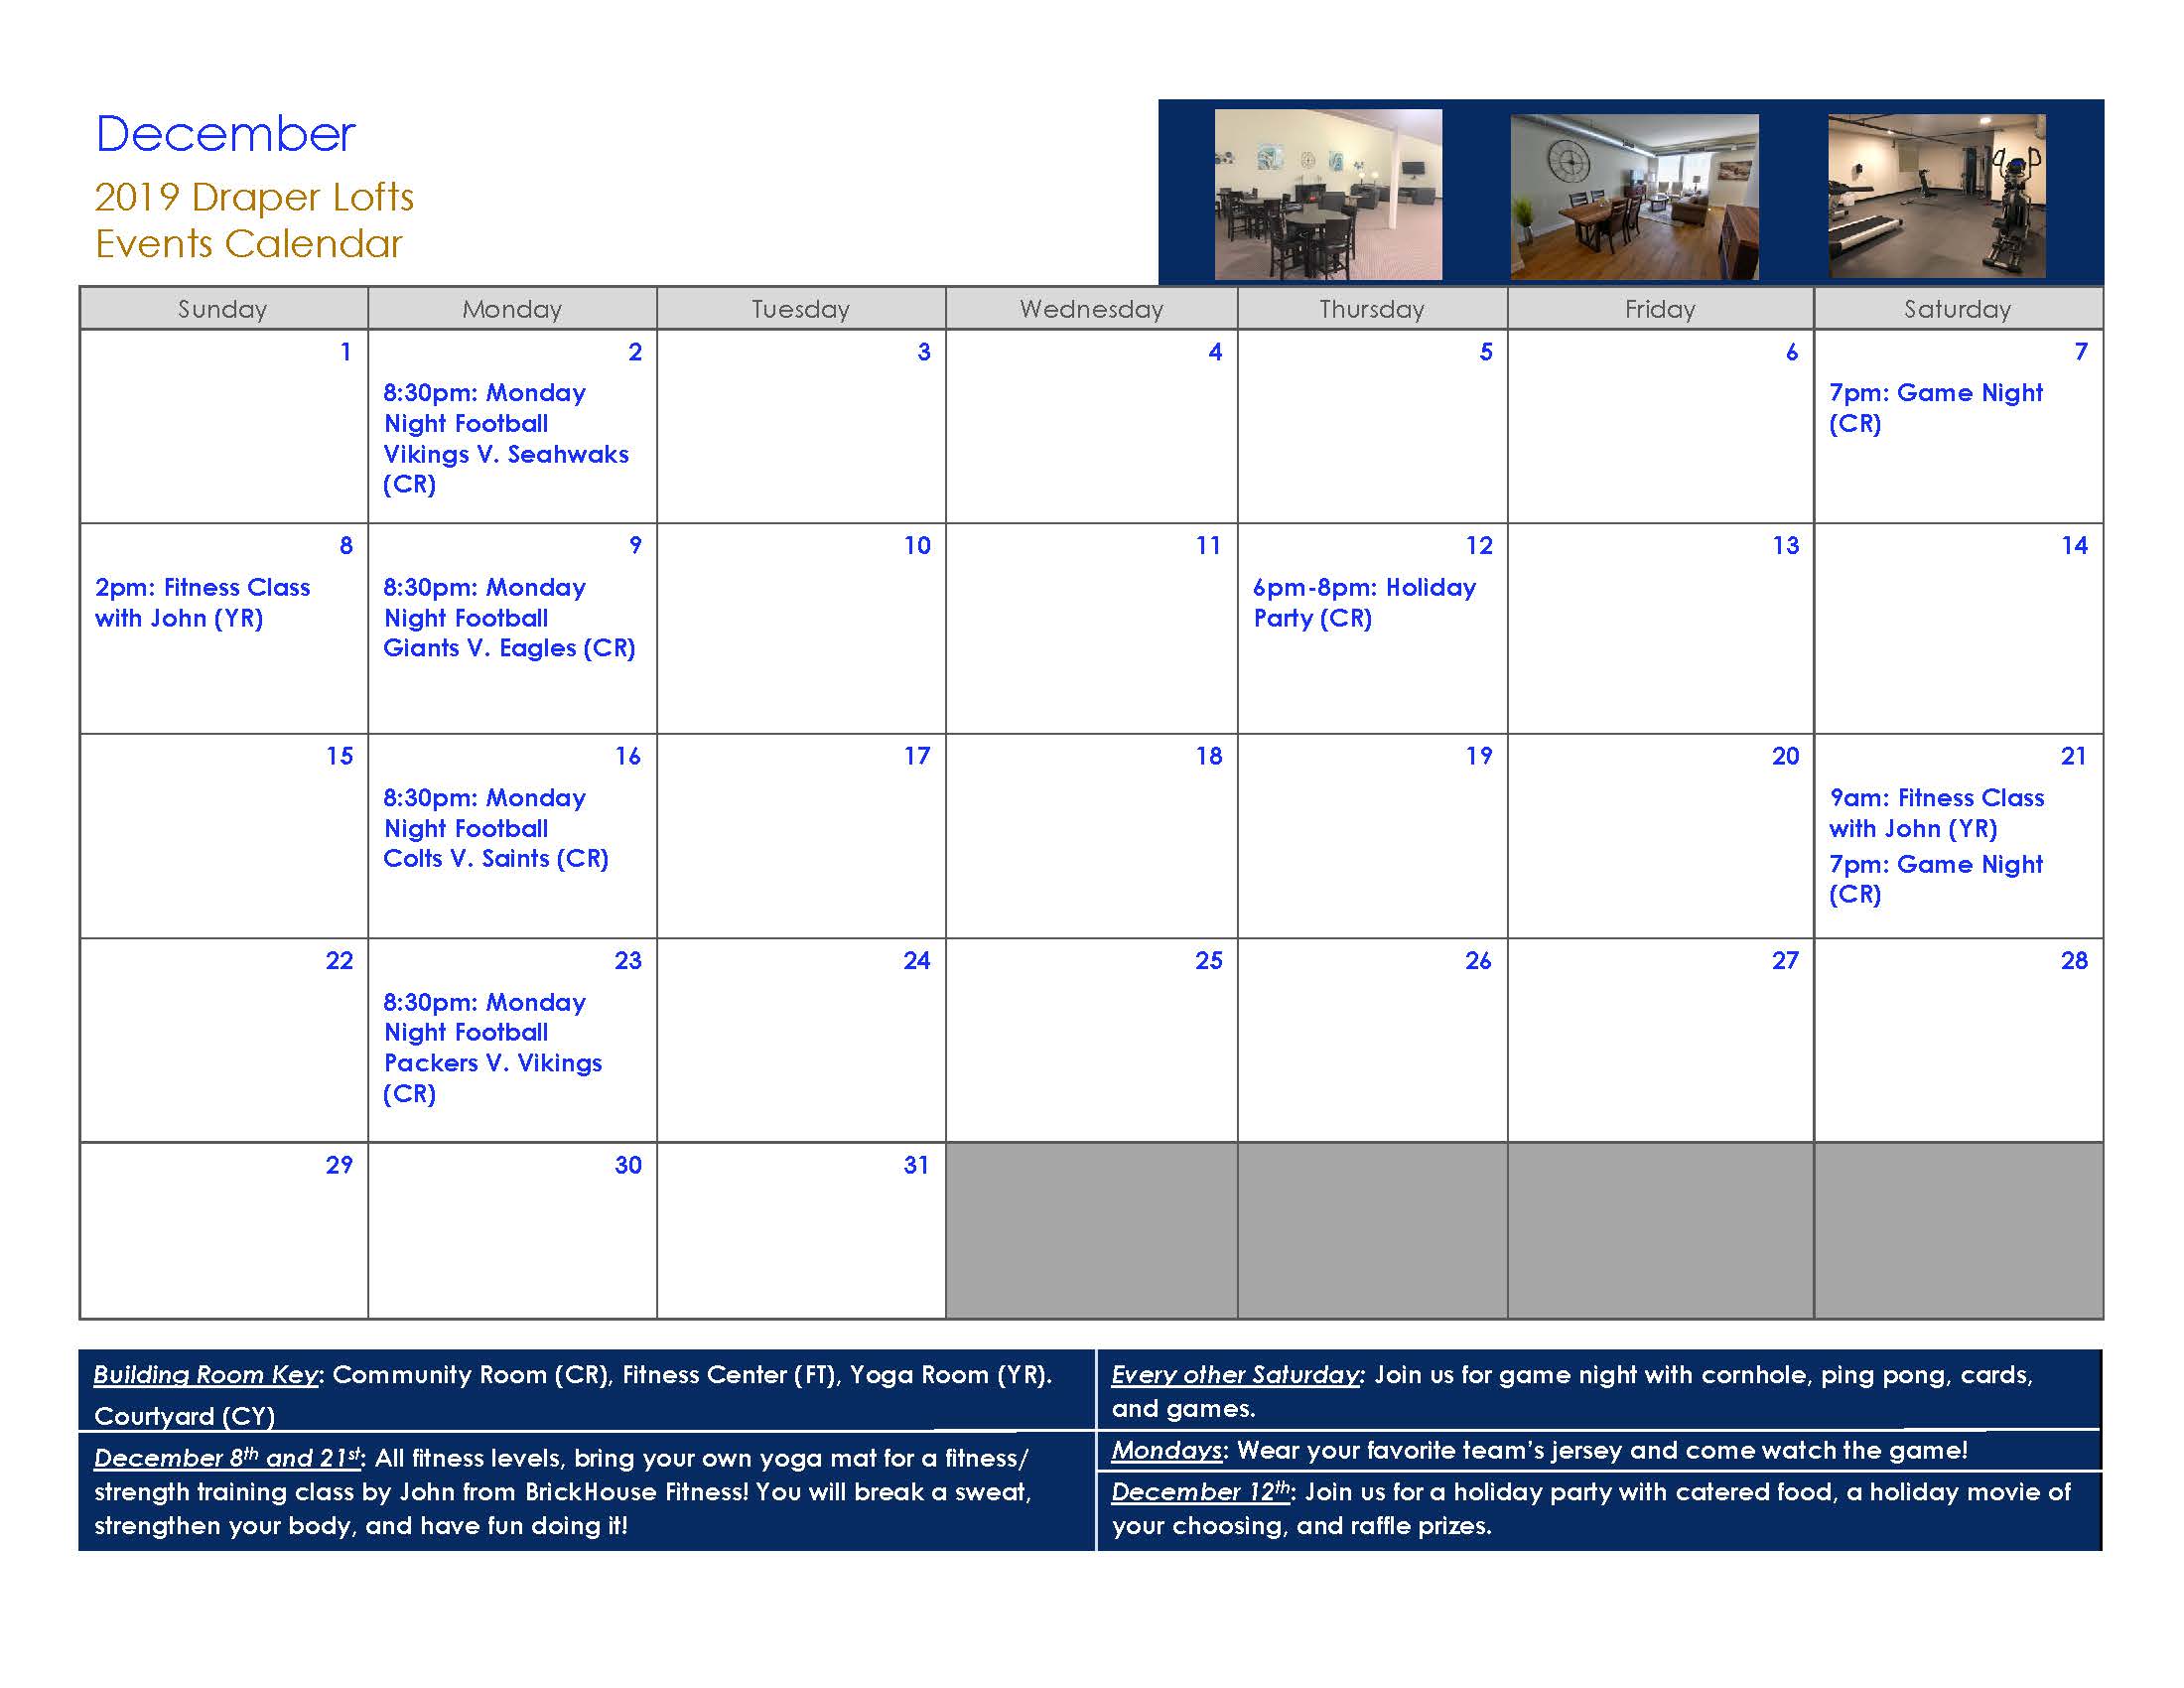 December Event Calendar Sunrise Management and Consulting